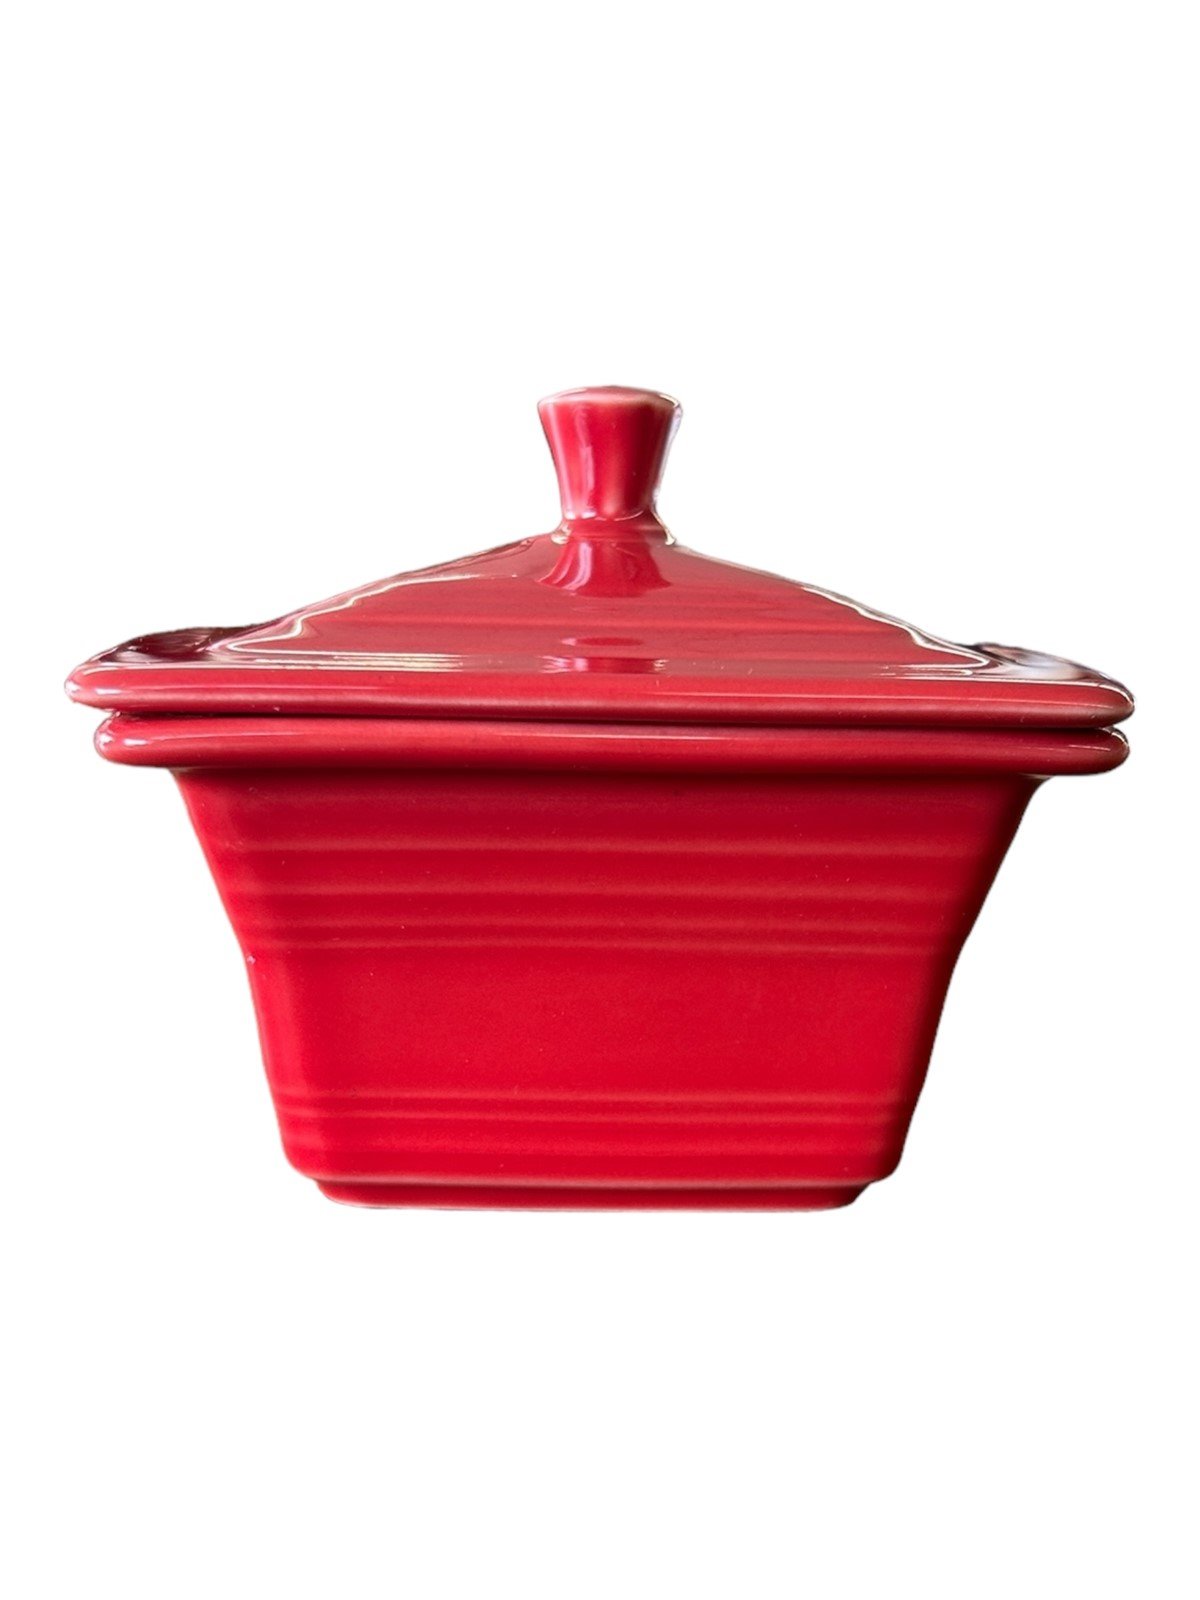 Fiesta - Scarlet Red Gift Box Belk Homer Laughlin Ceramic Home Decor Container